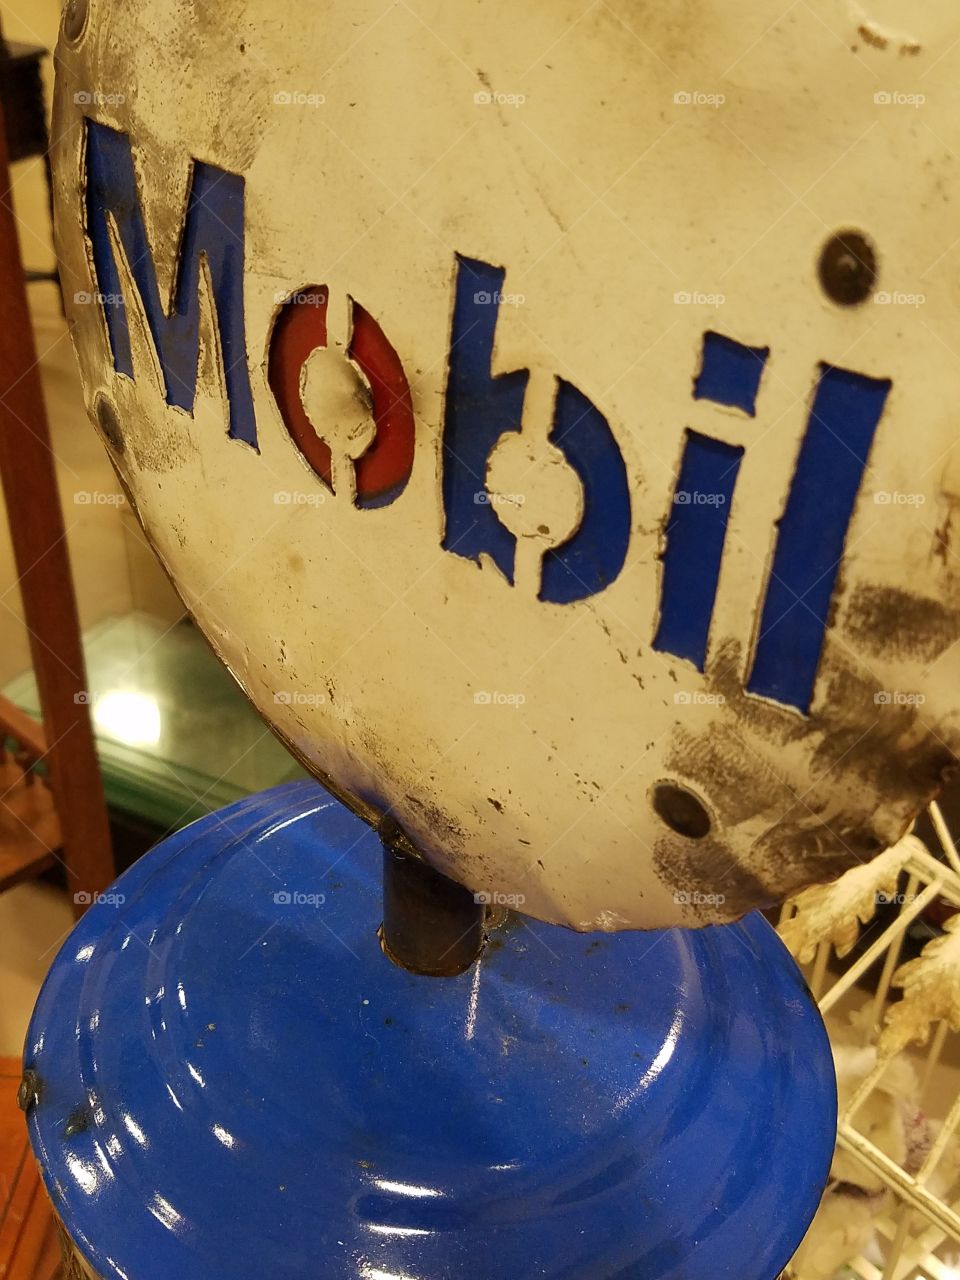 Mobil oil